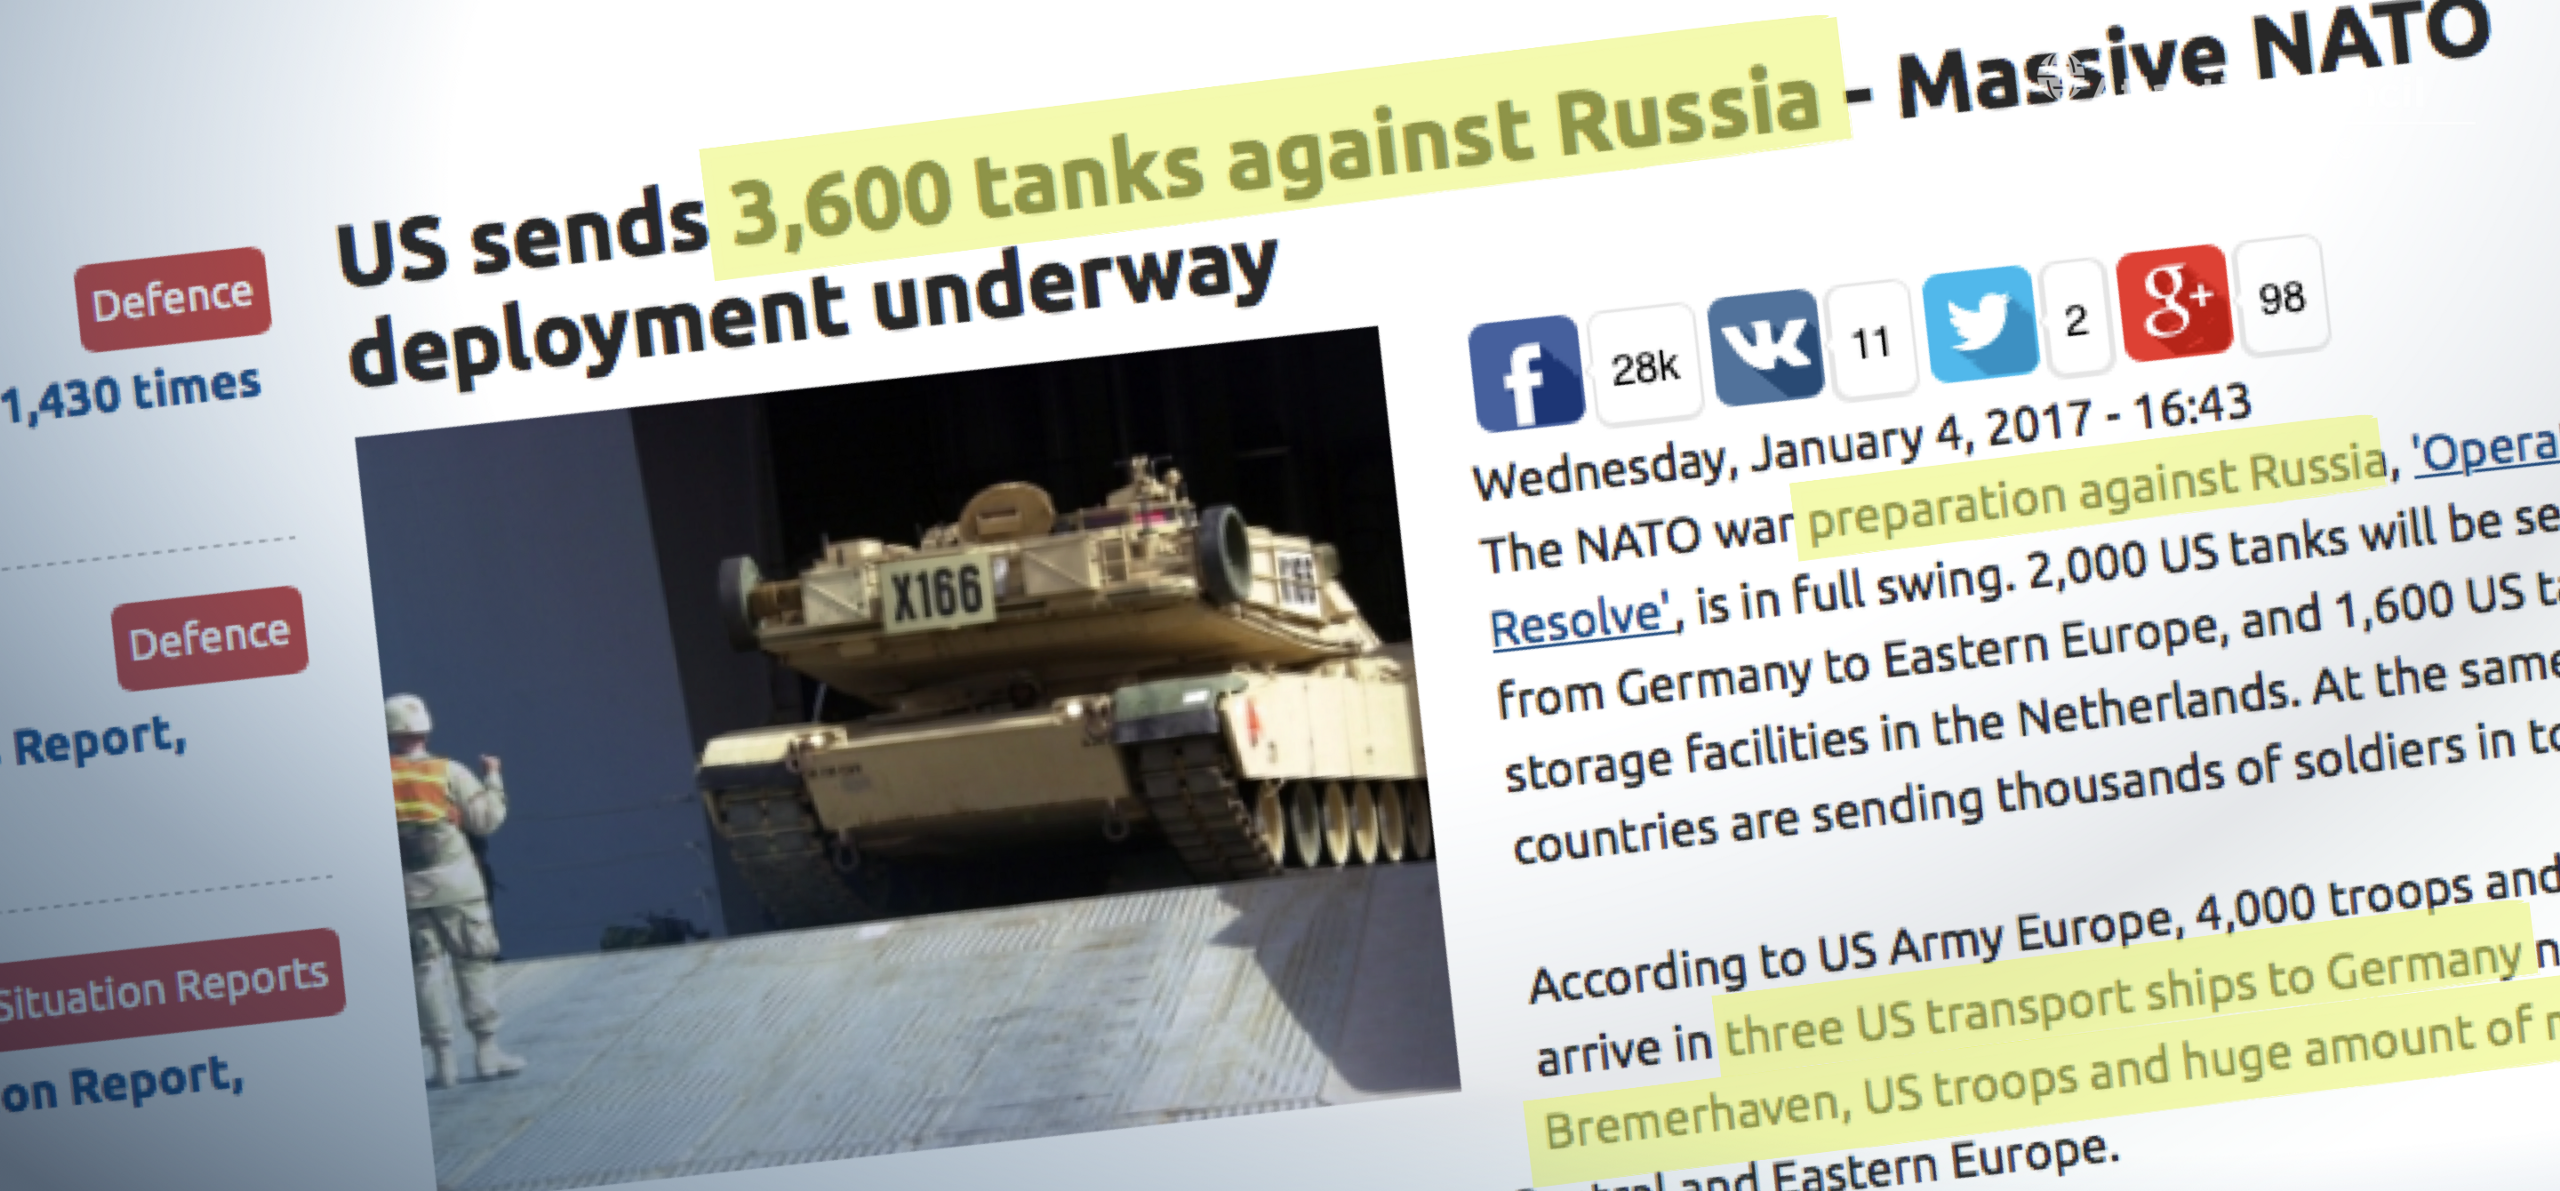 Three thousand fake tanks